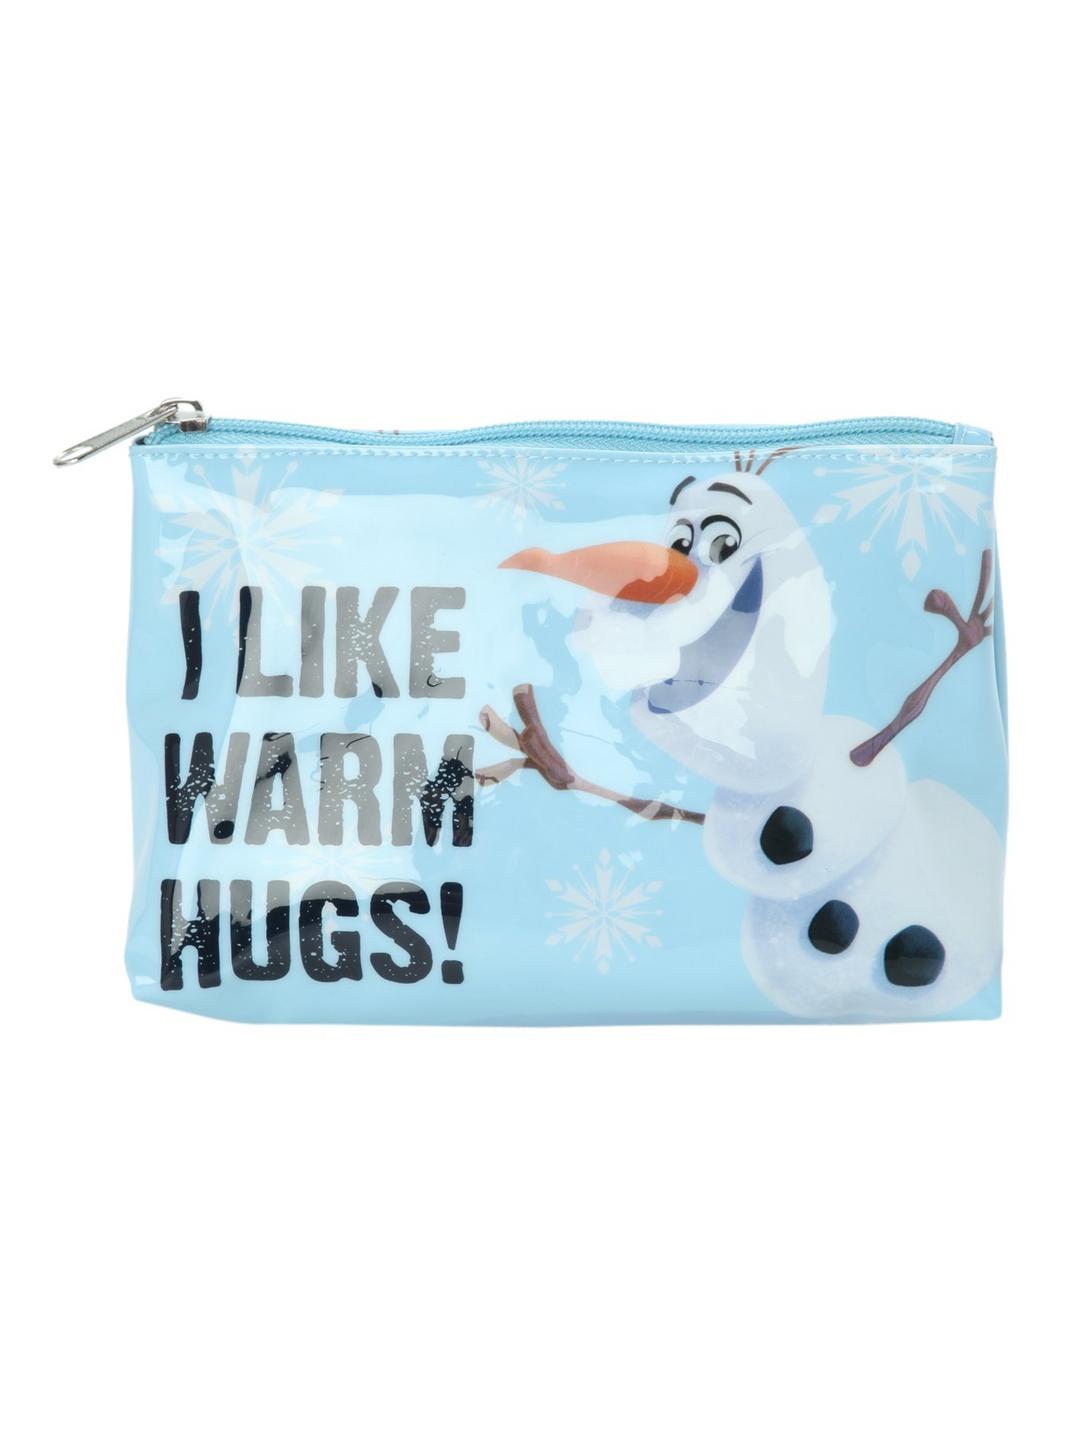 Disney Frozen Olaf Warm Hugs Cosmetic Bag, , hi-res